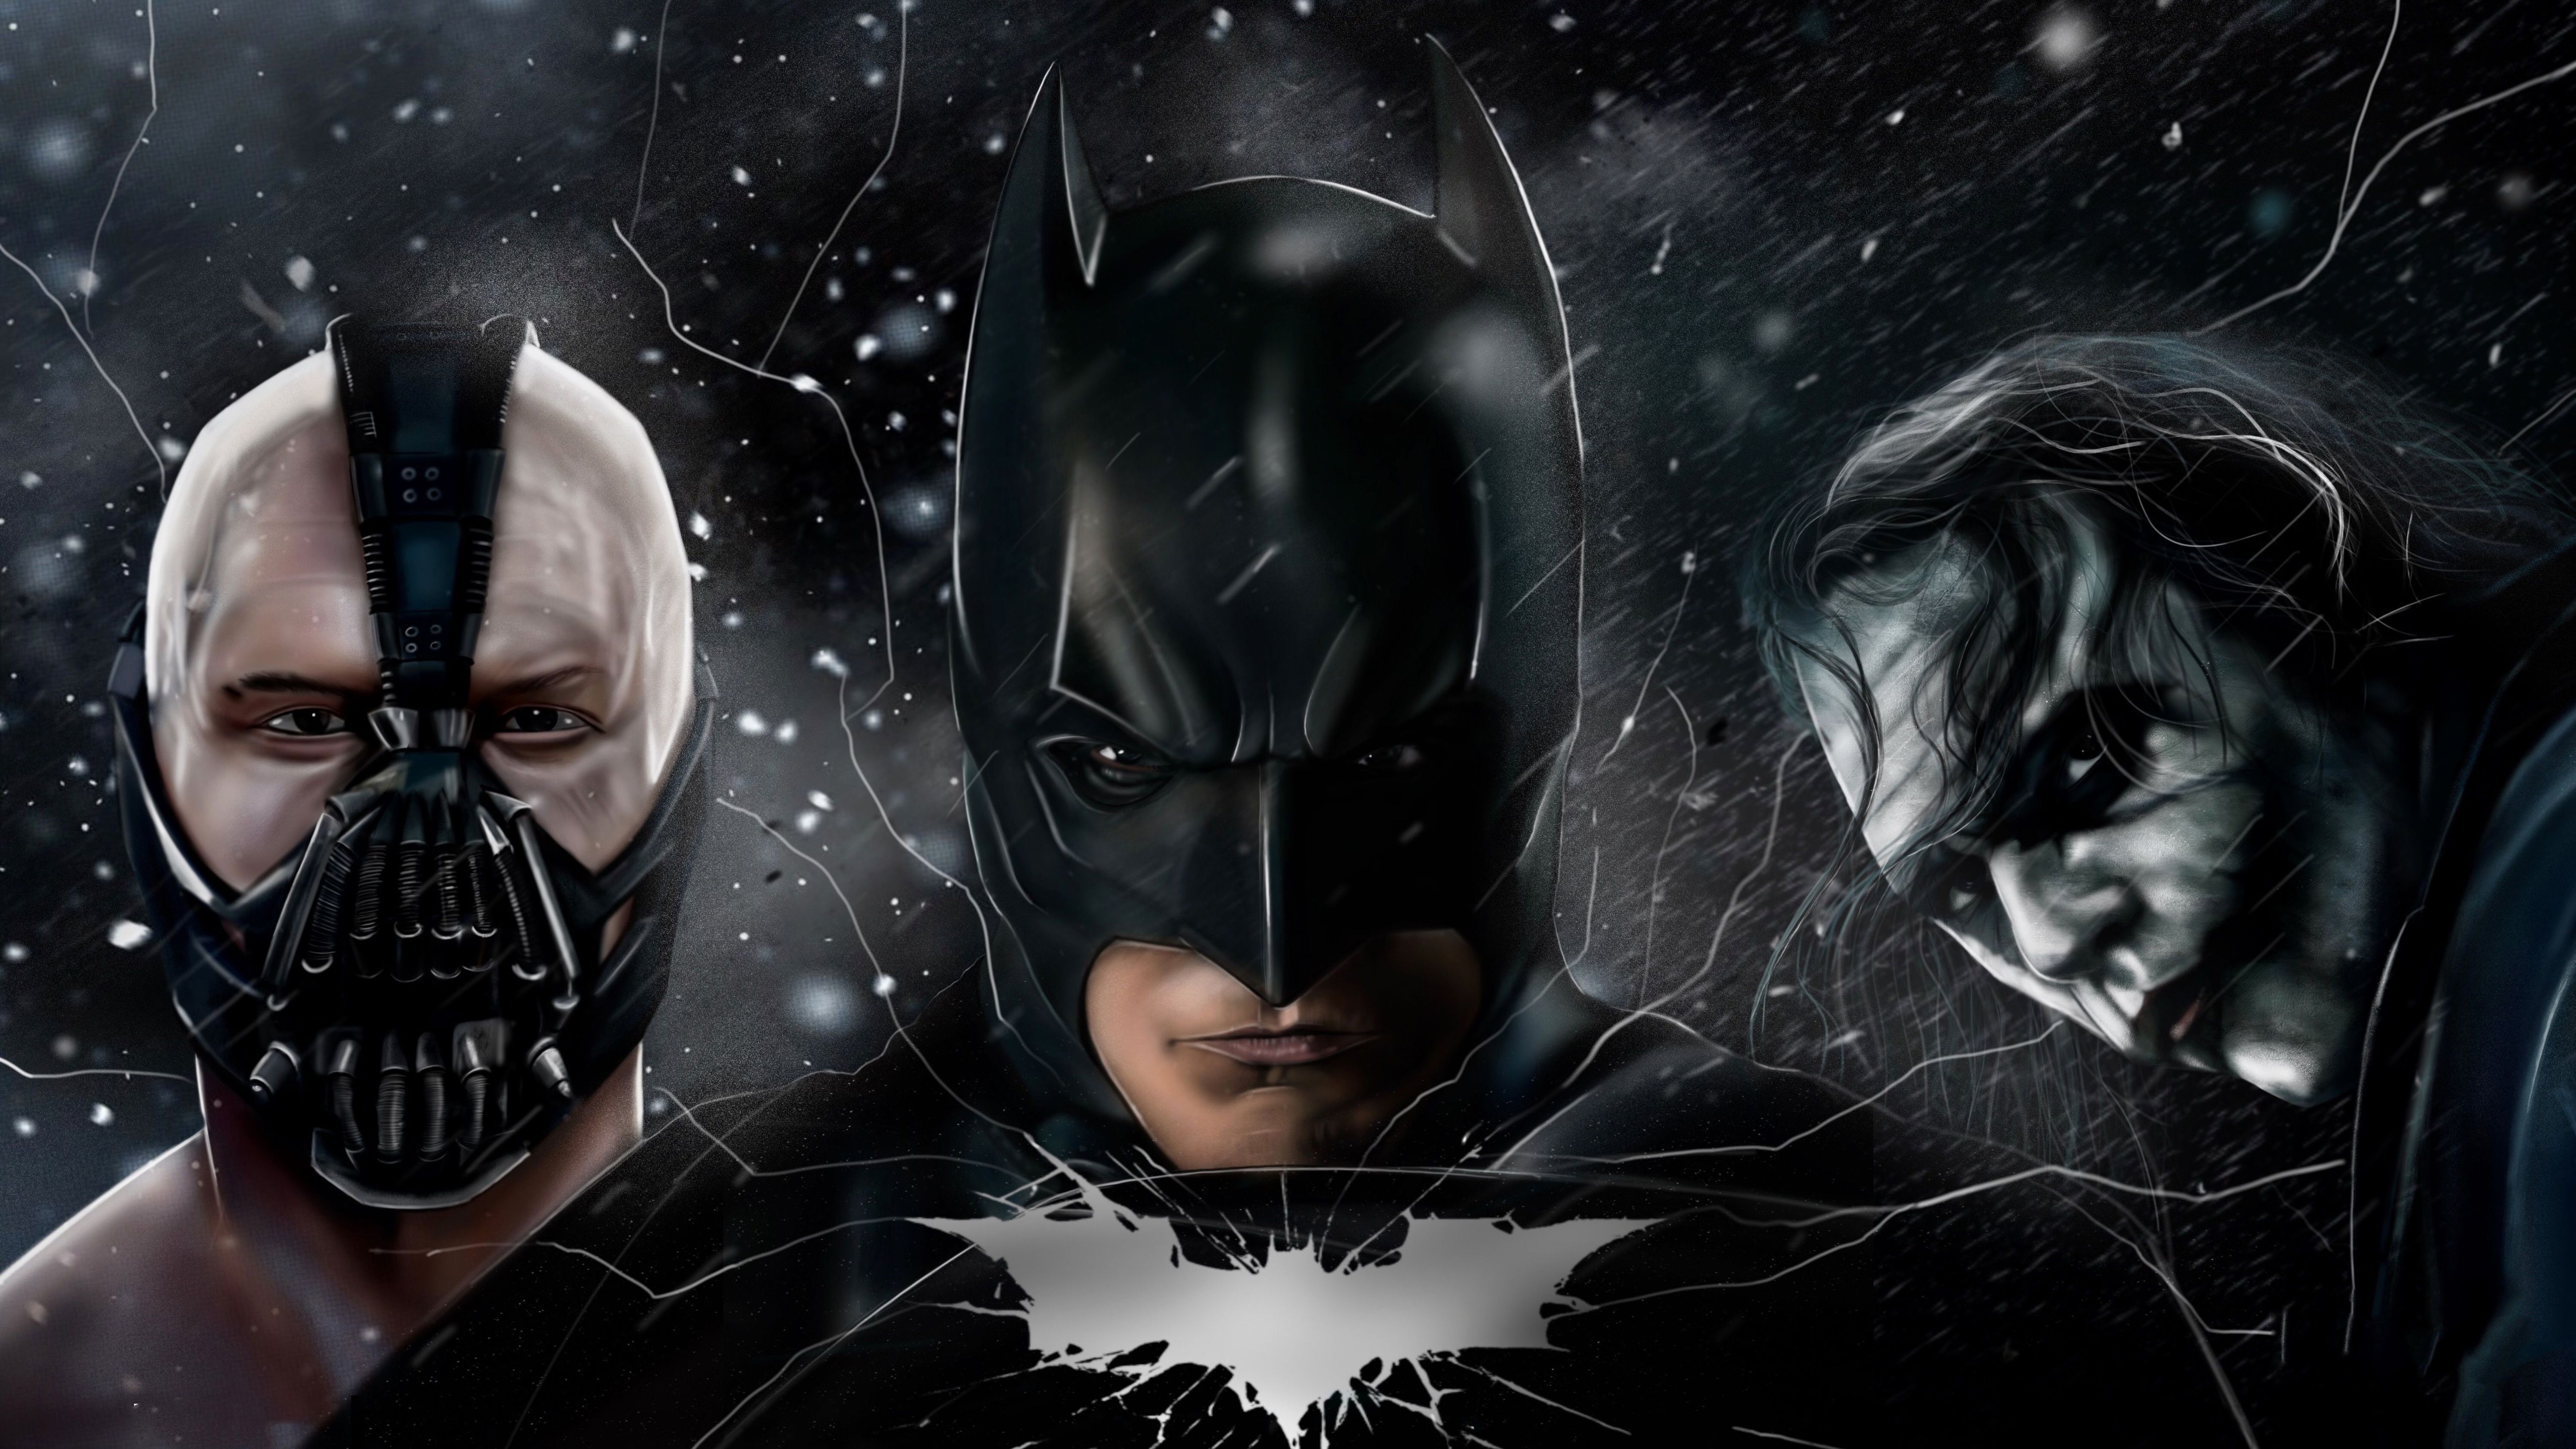 The Dark Knight Batman Joker Bane 5k 5k HD 4k Wallpaper, Image, Background, Photo and Picture